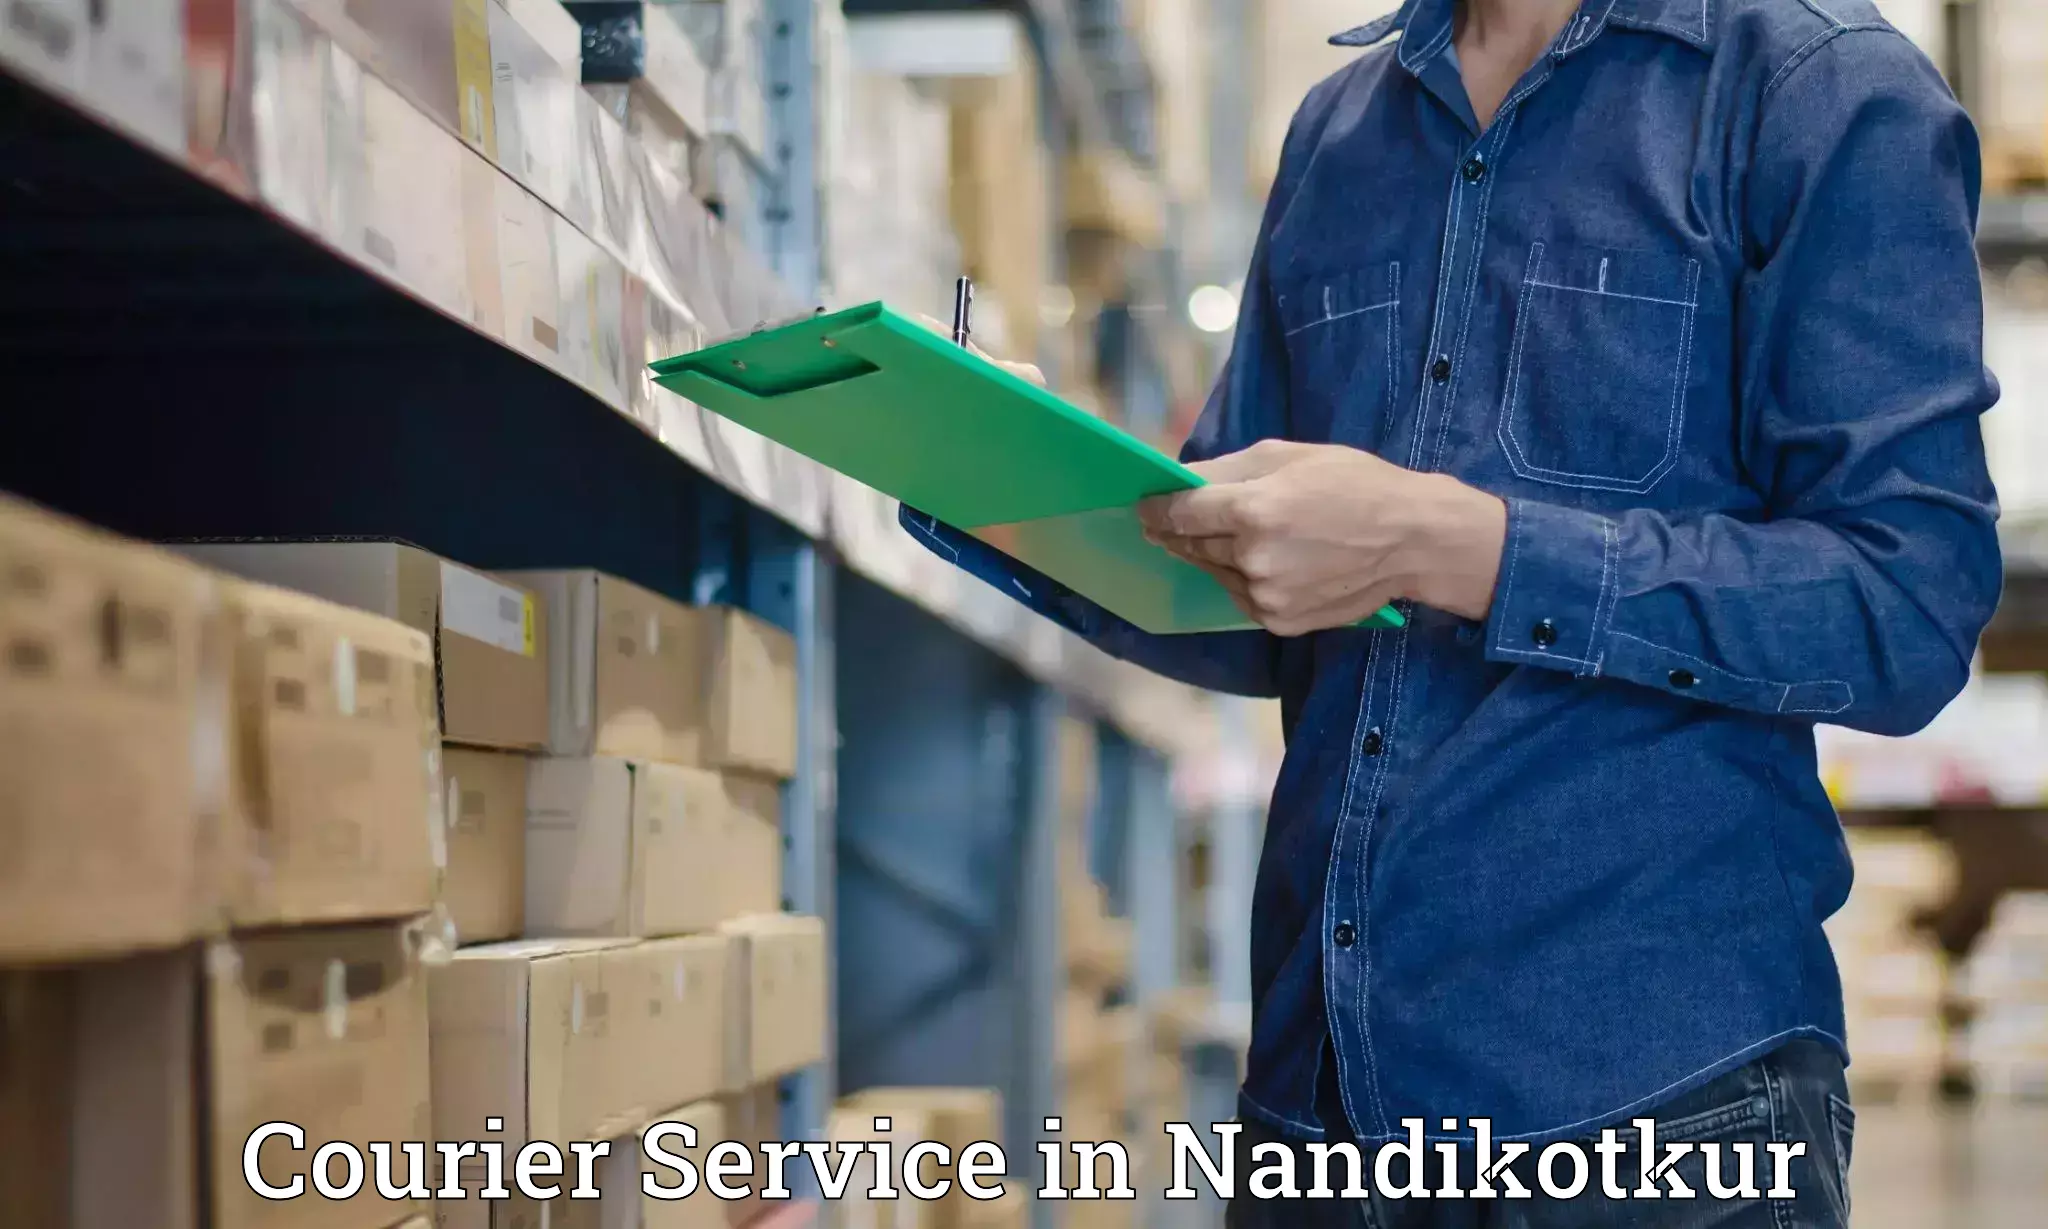 Efficient order fulfillment in Nandikotkur